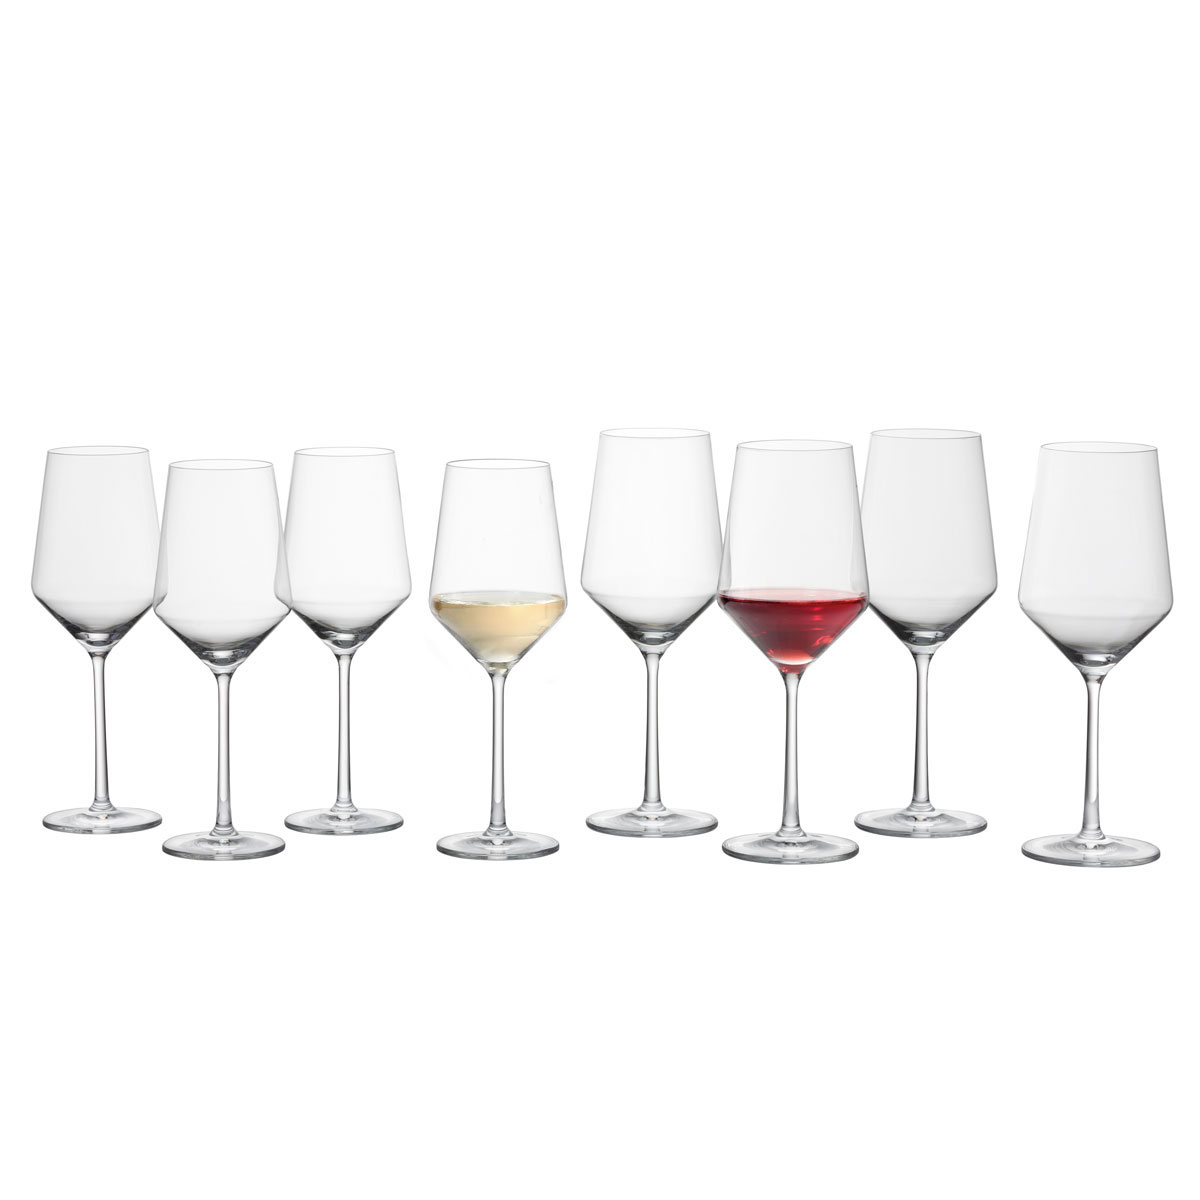 Schott Zwiesel Red Wine Glasses Pure 550 ml - 2 Pieces